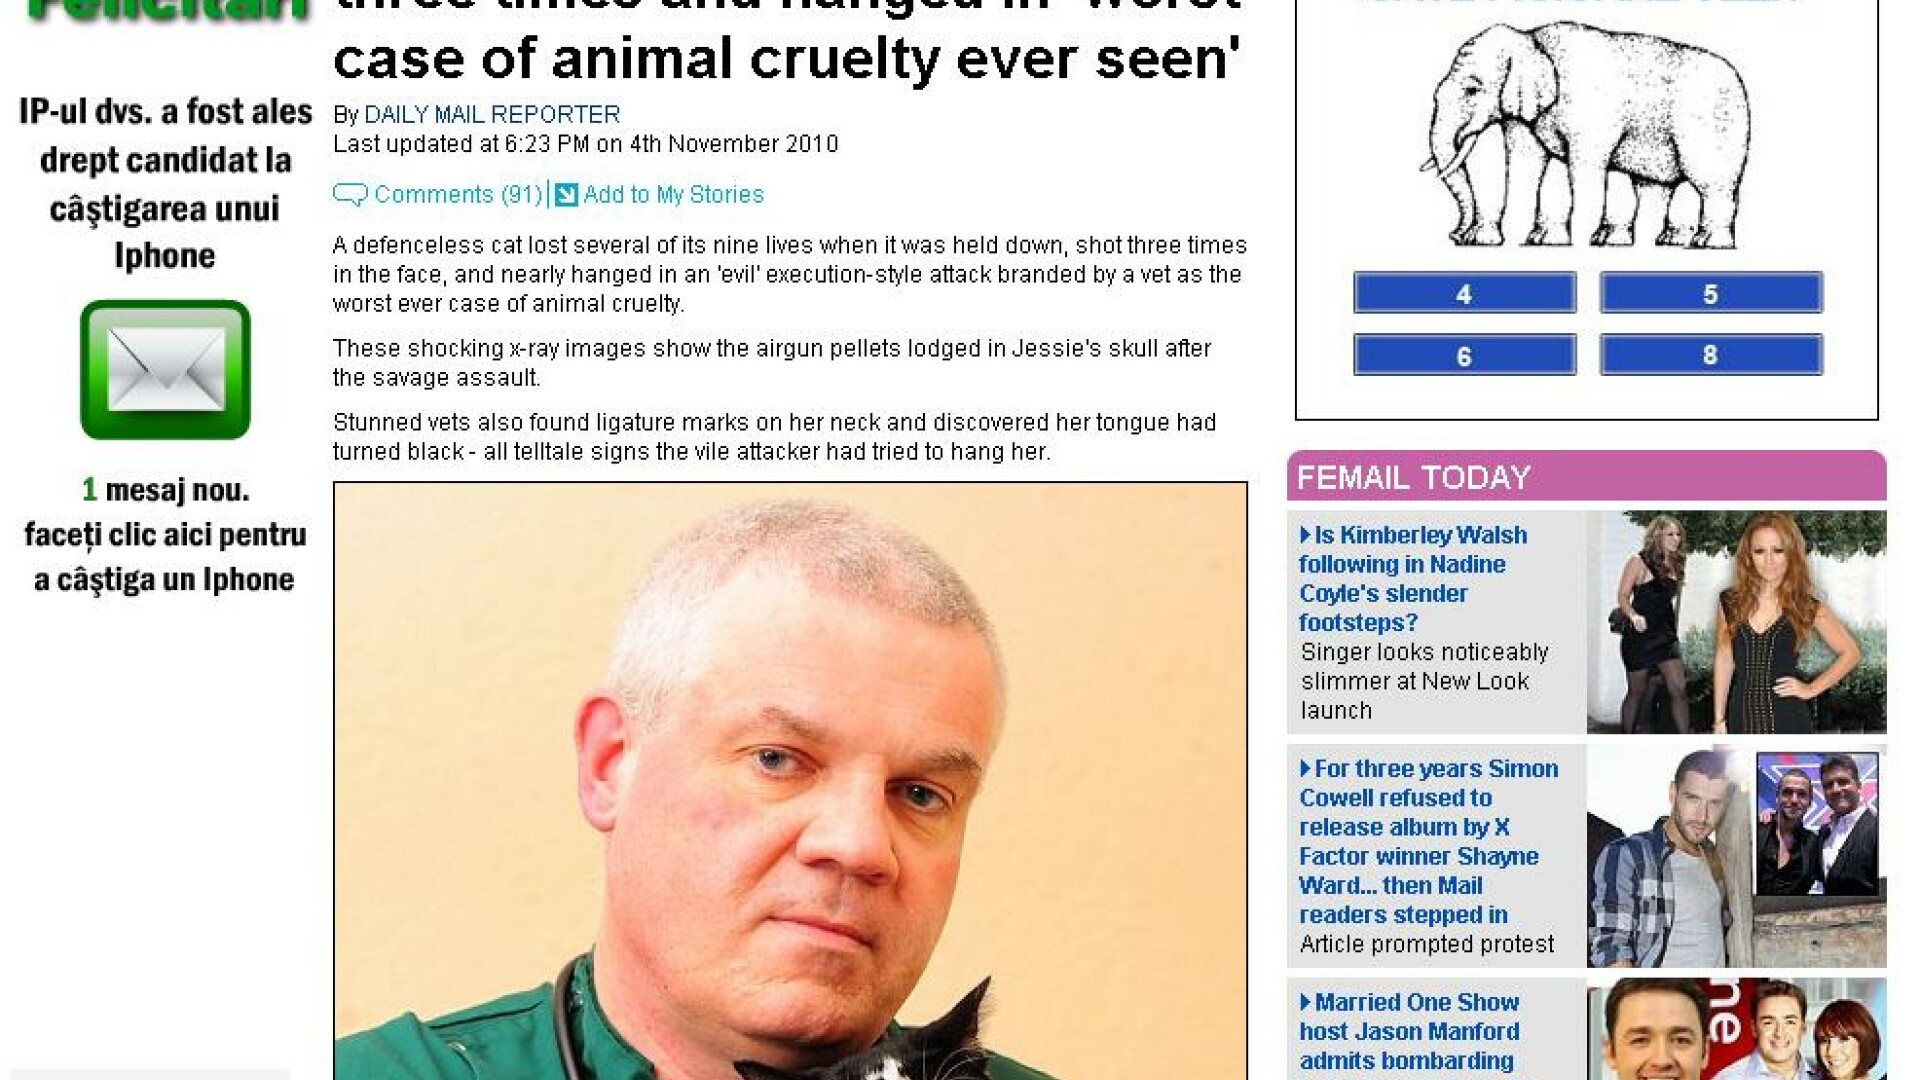 Cel mai grav caz de torturare a animalelor!Impuscata de 3 ori si spanzurata